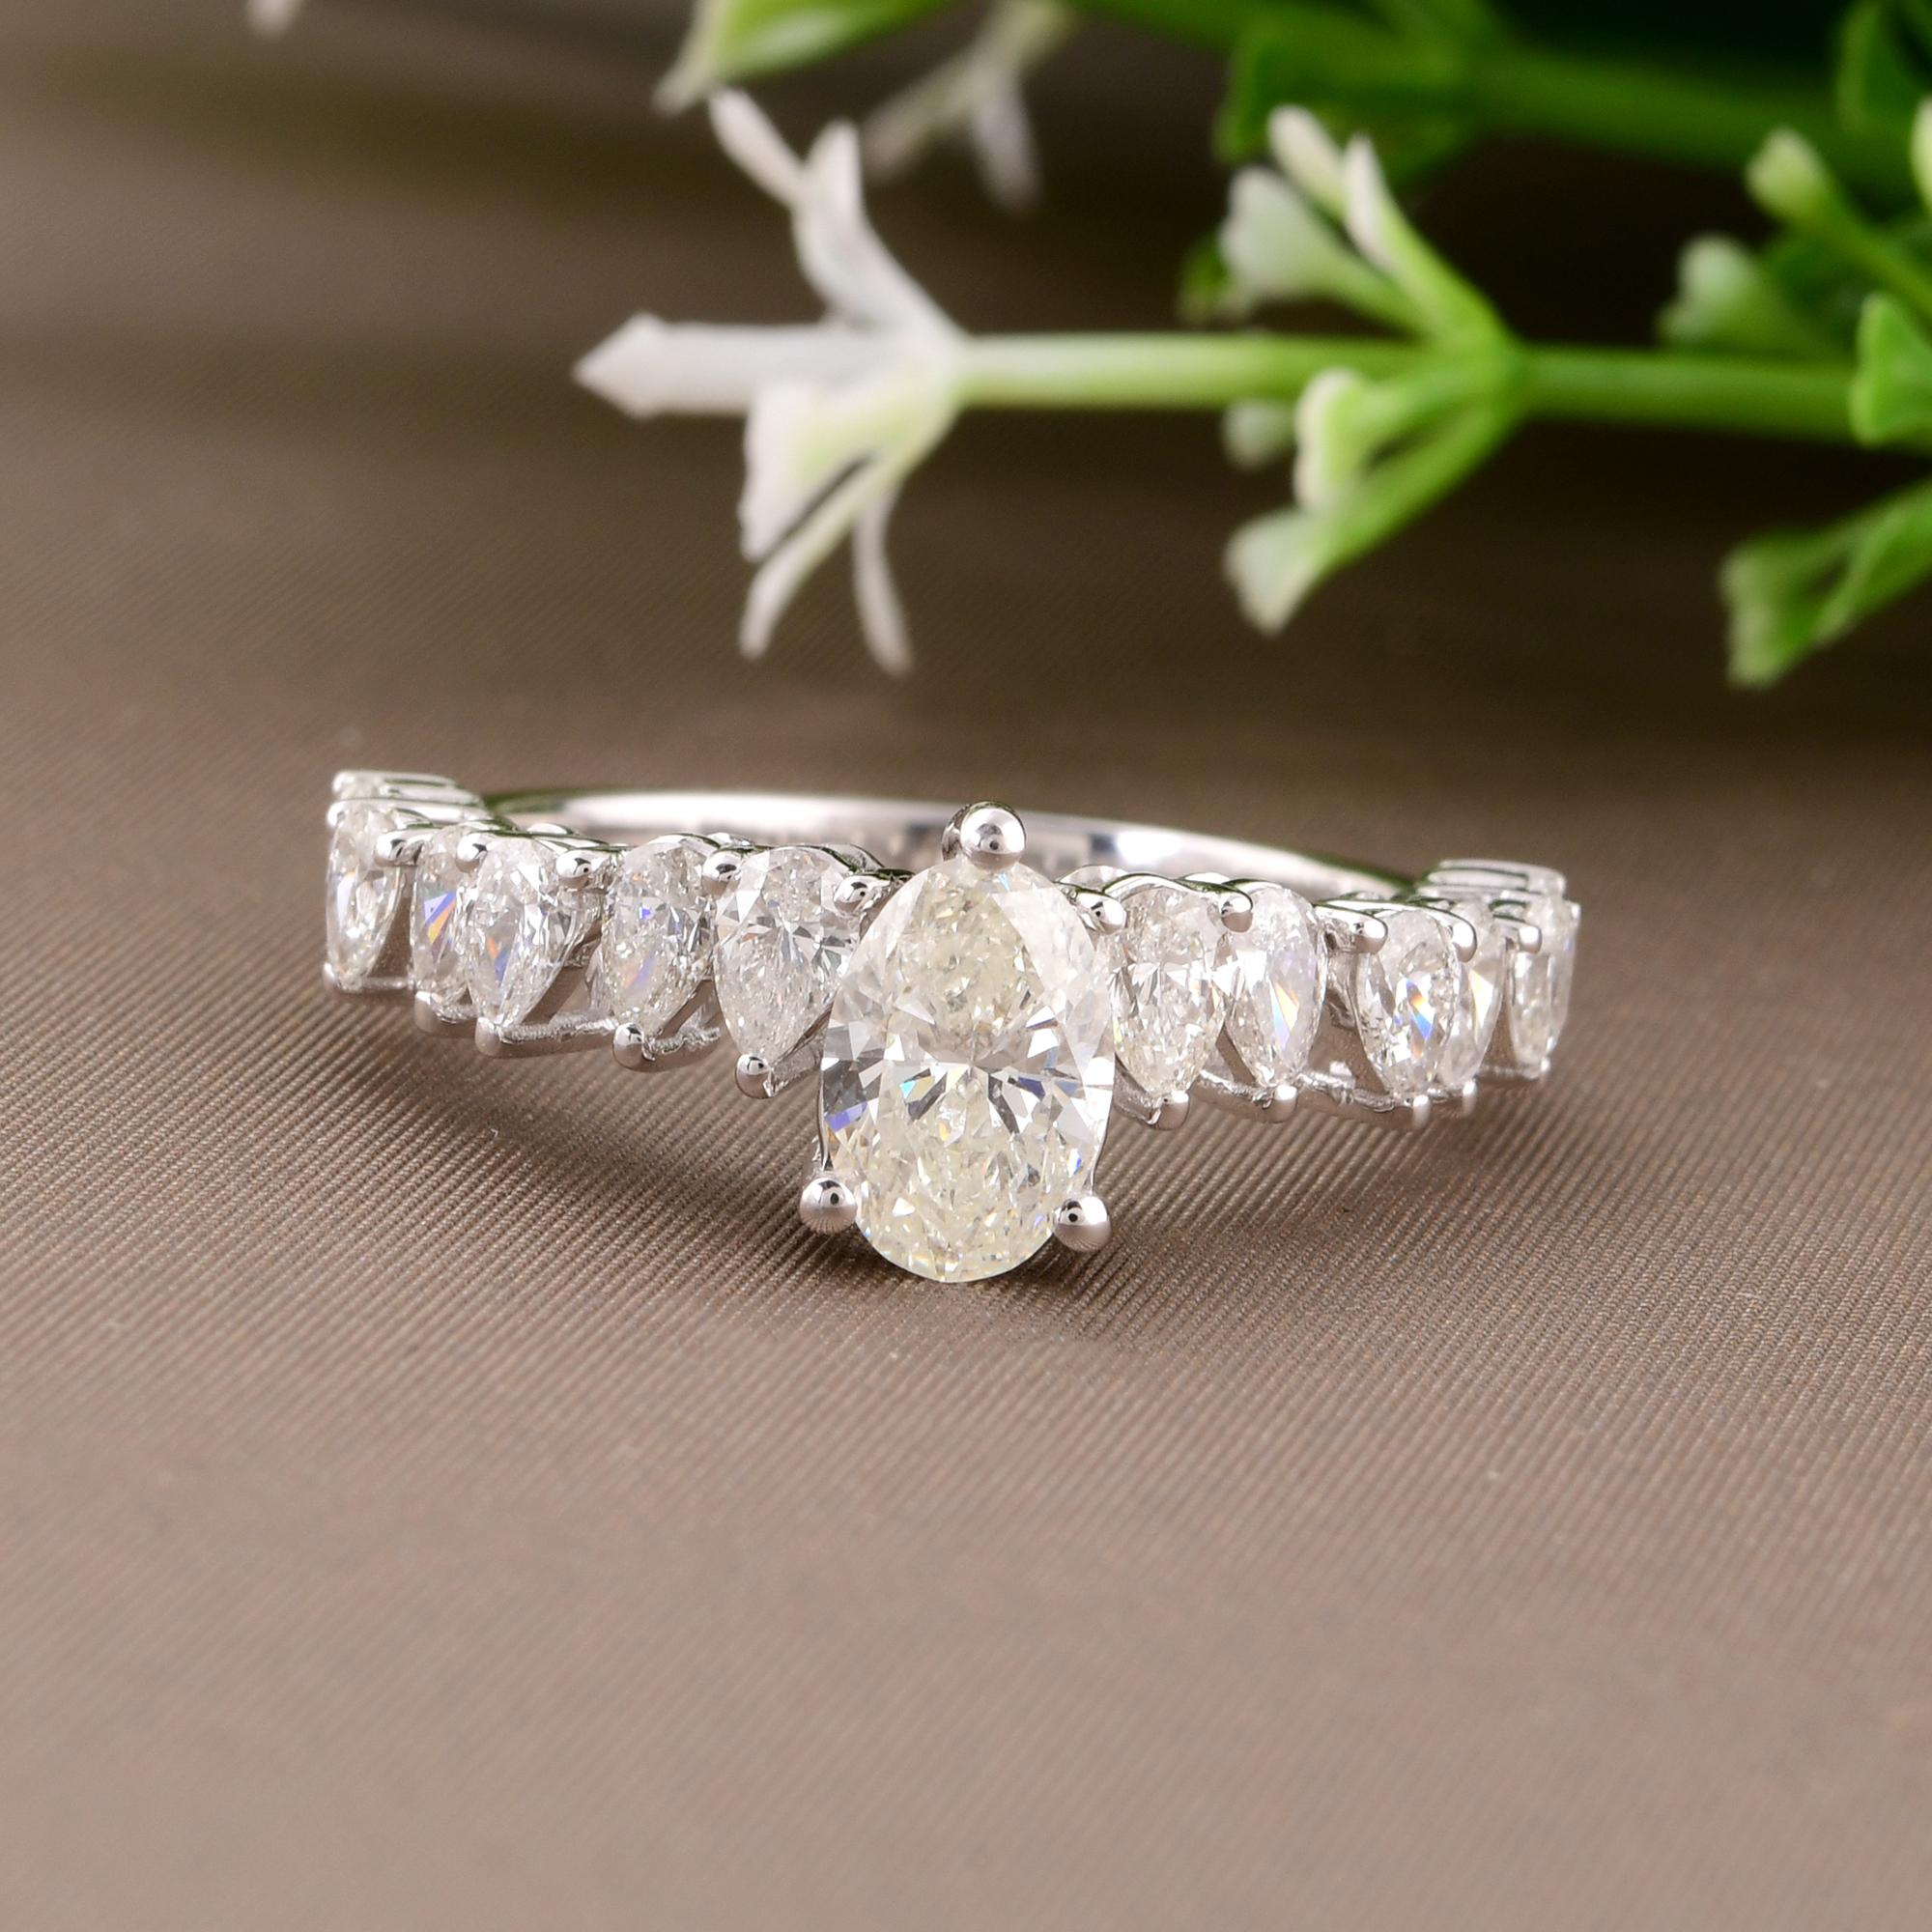 Modern 1.59 Carat Pear & Oval Diamond Ring 18 Karat White Gold Handmade Fine Jewelry For Sale